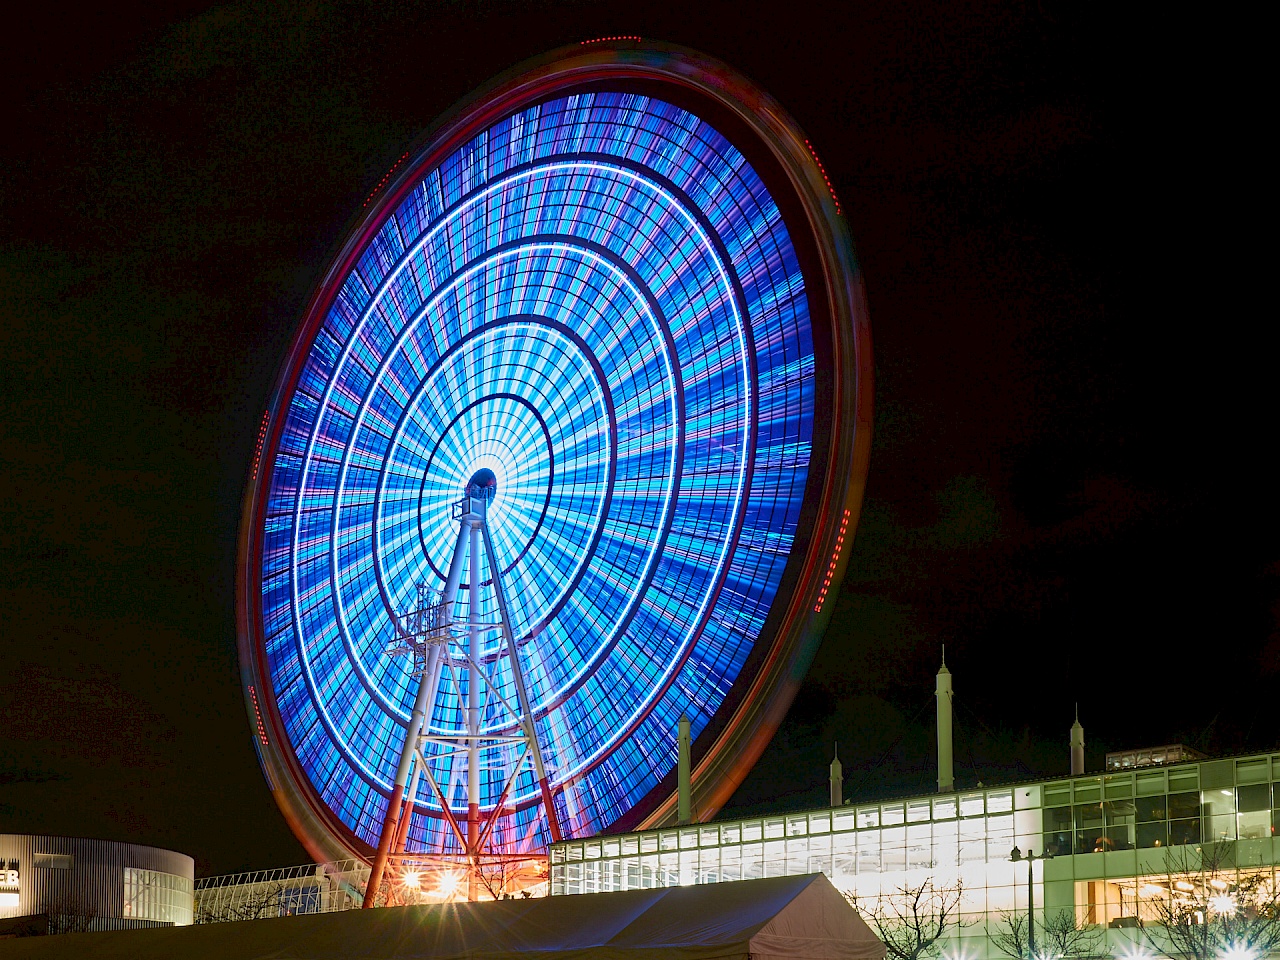 Das Riesenrad (Giant Sky Wheel) in Odaiba in Tokyo